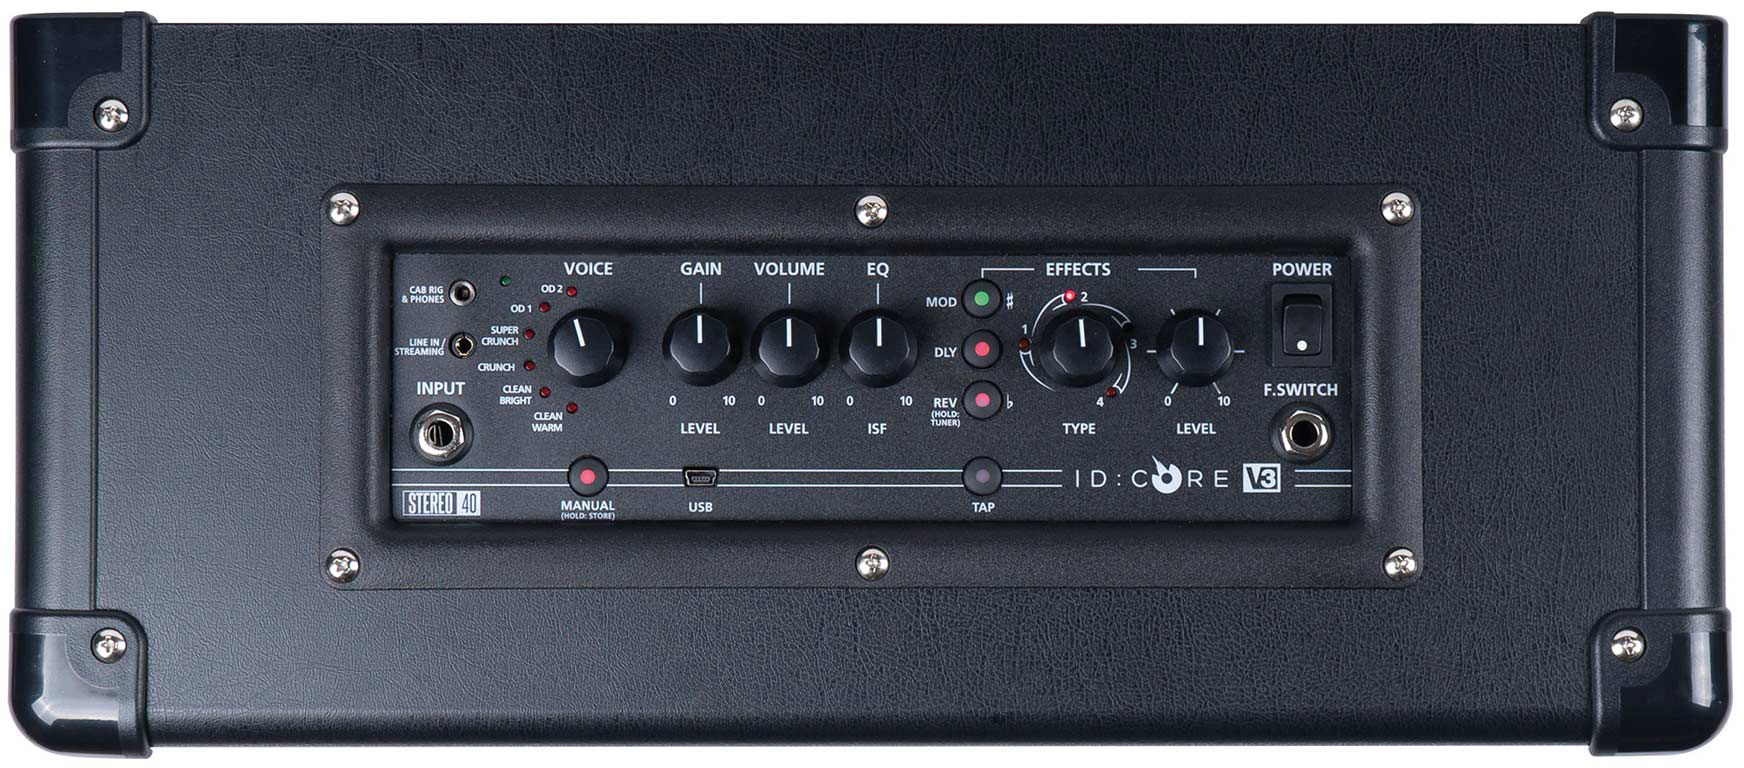 Blackstar Id:core V3 Stereo 40 2x20w 2x6.5 - Ampli Guitare Électrique Combo - Variation 2